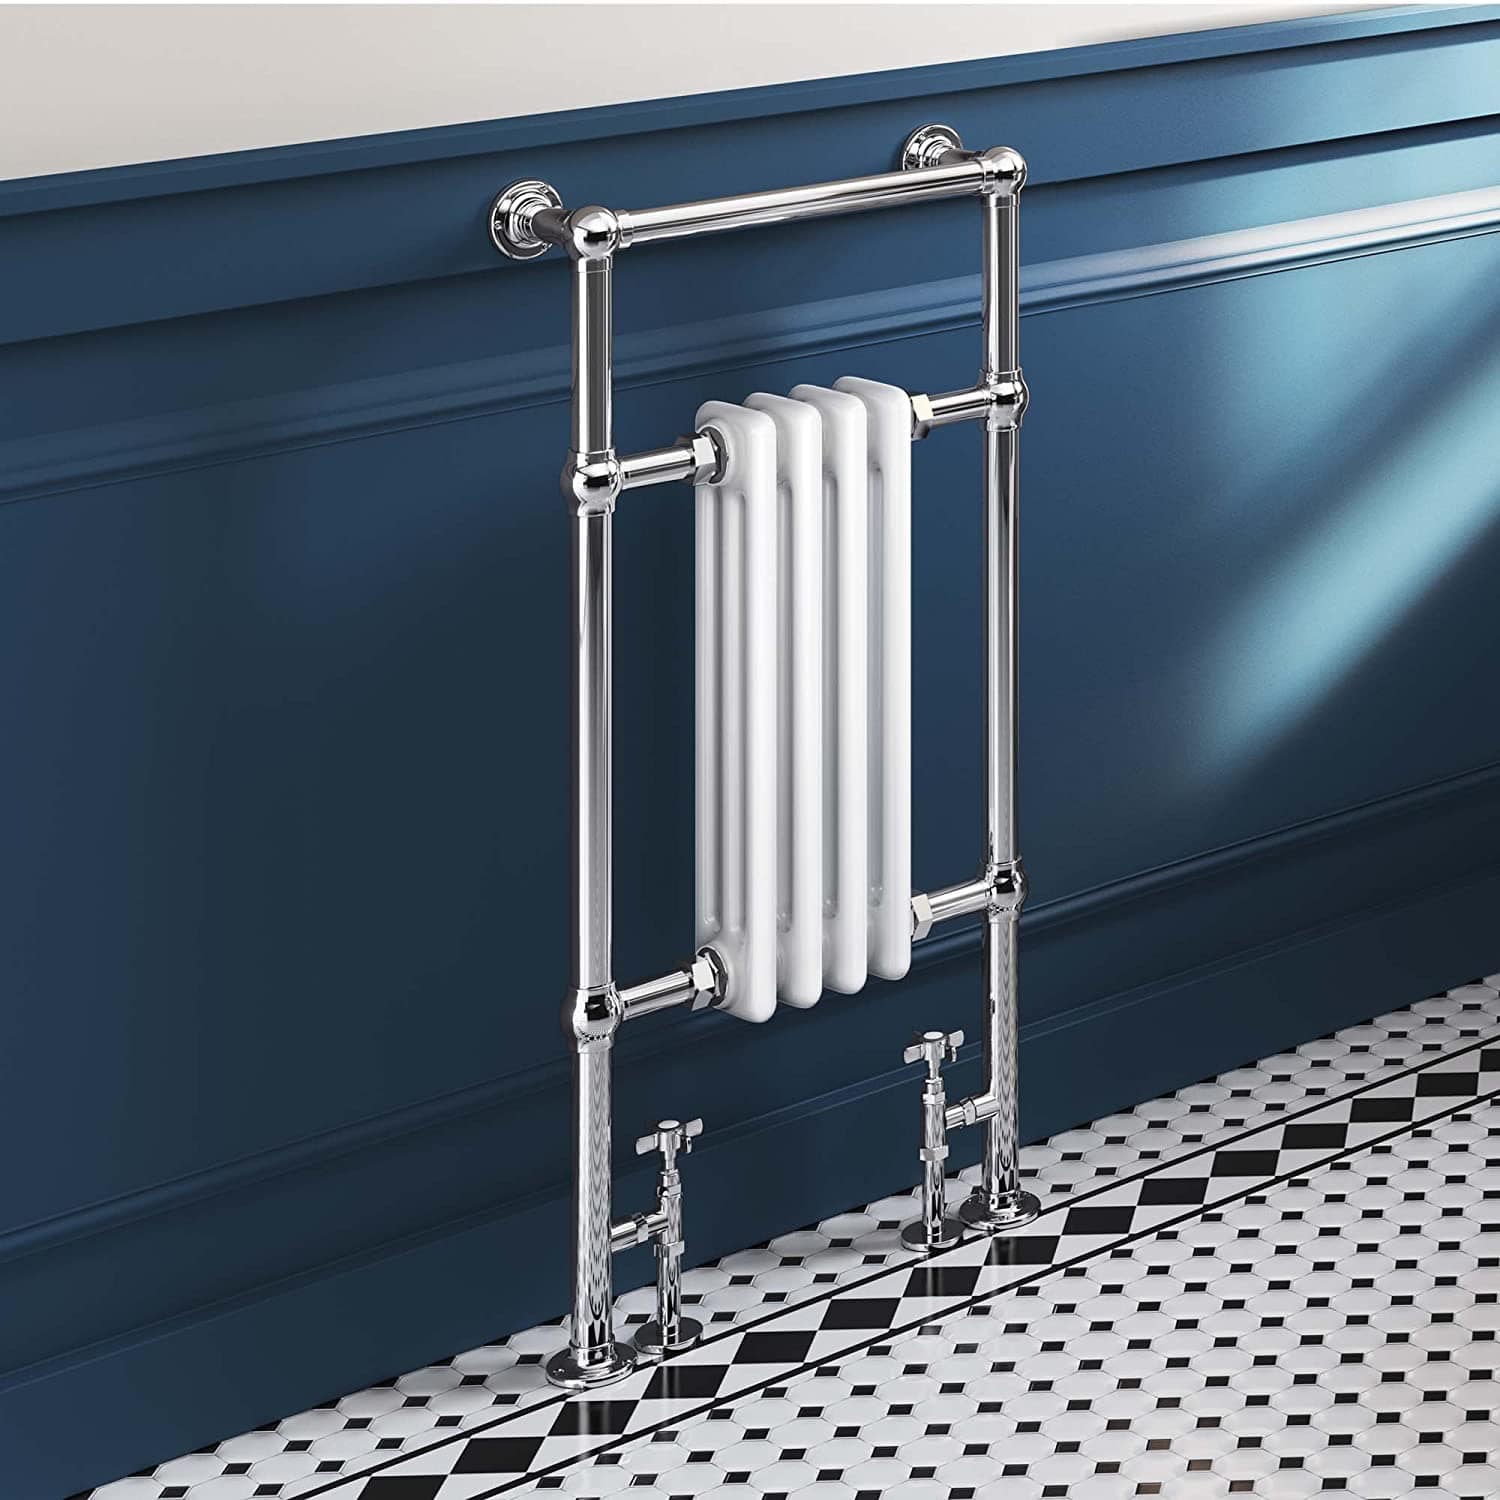 Bathroom4less Heating,Heated Towel Rails,Column Radiators Vintage Vertical Heated Towel Radiator - 4 Column - Chrome&White